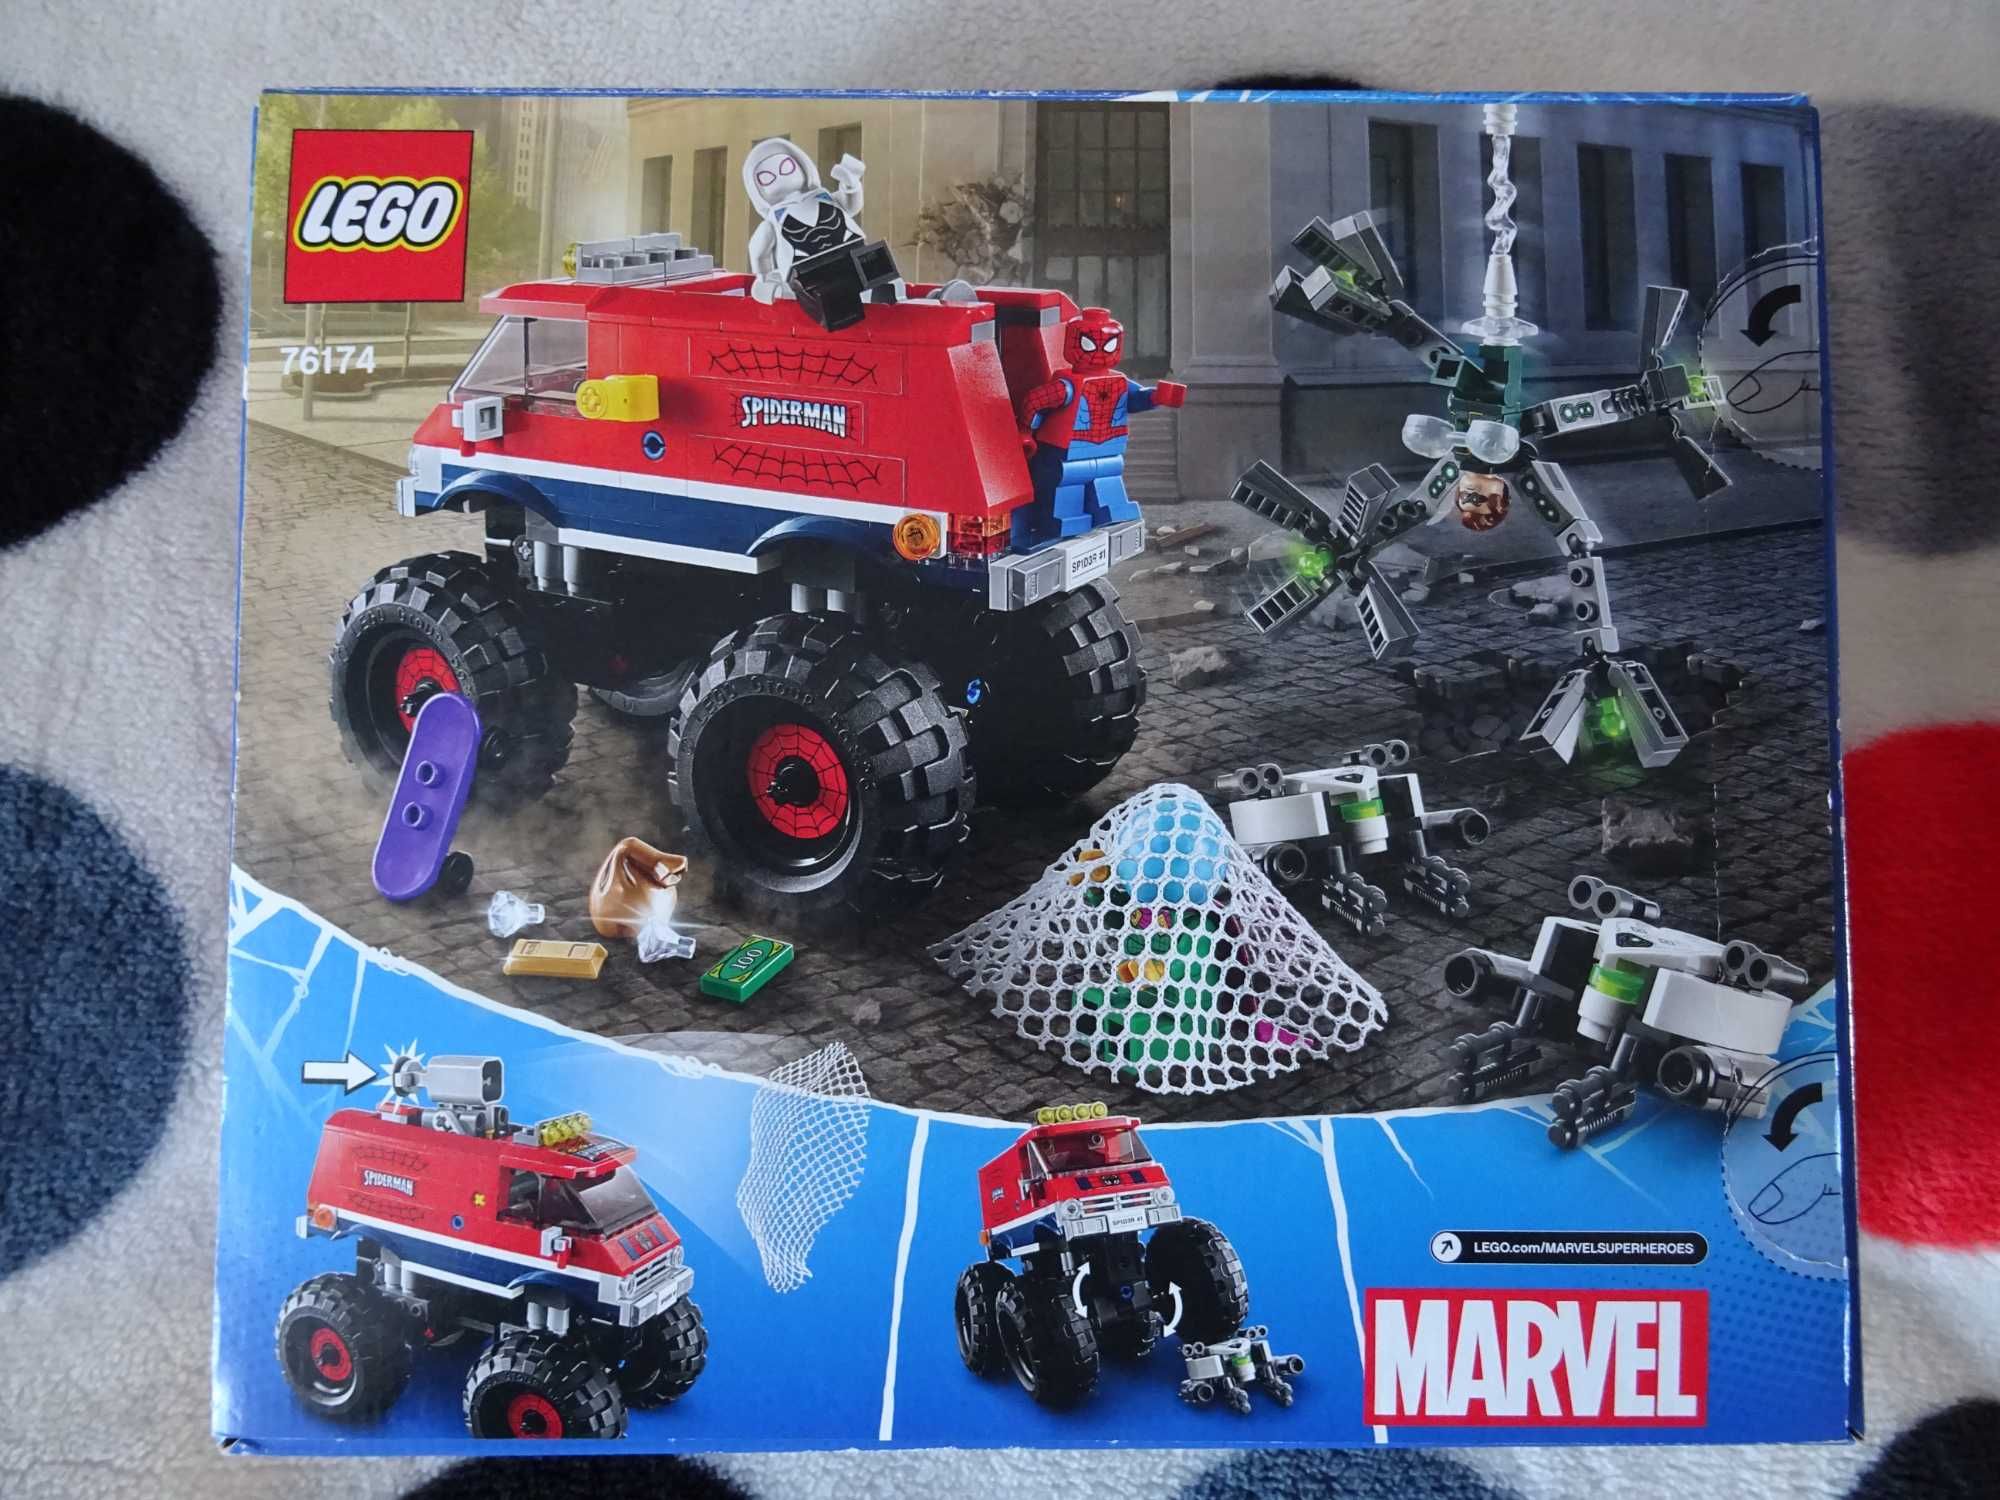 Nowy zestaw Lego Marvel Spiderman 76174 Spiderman Monster Truck